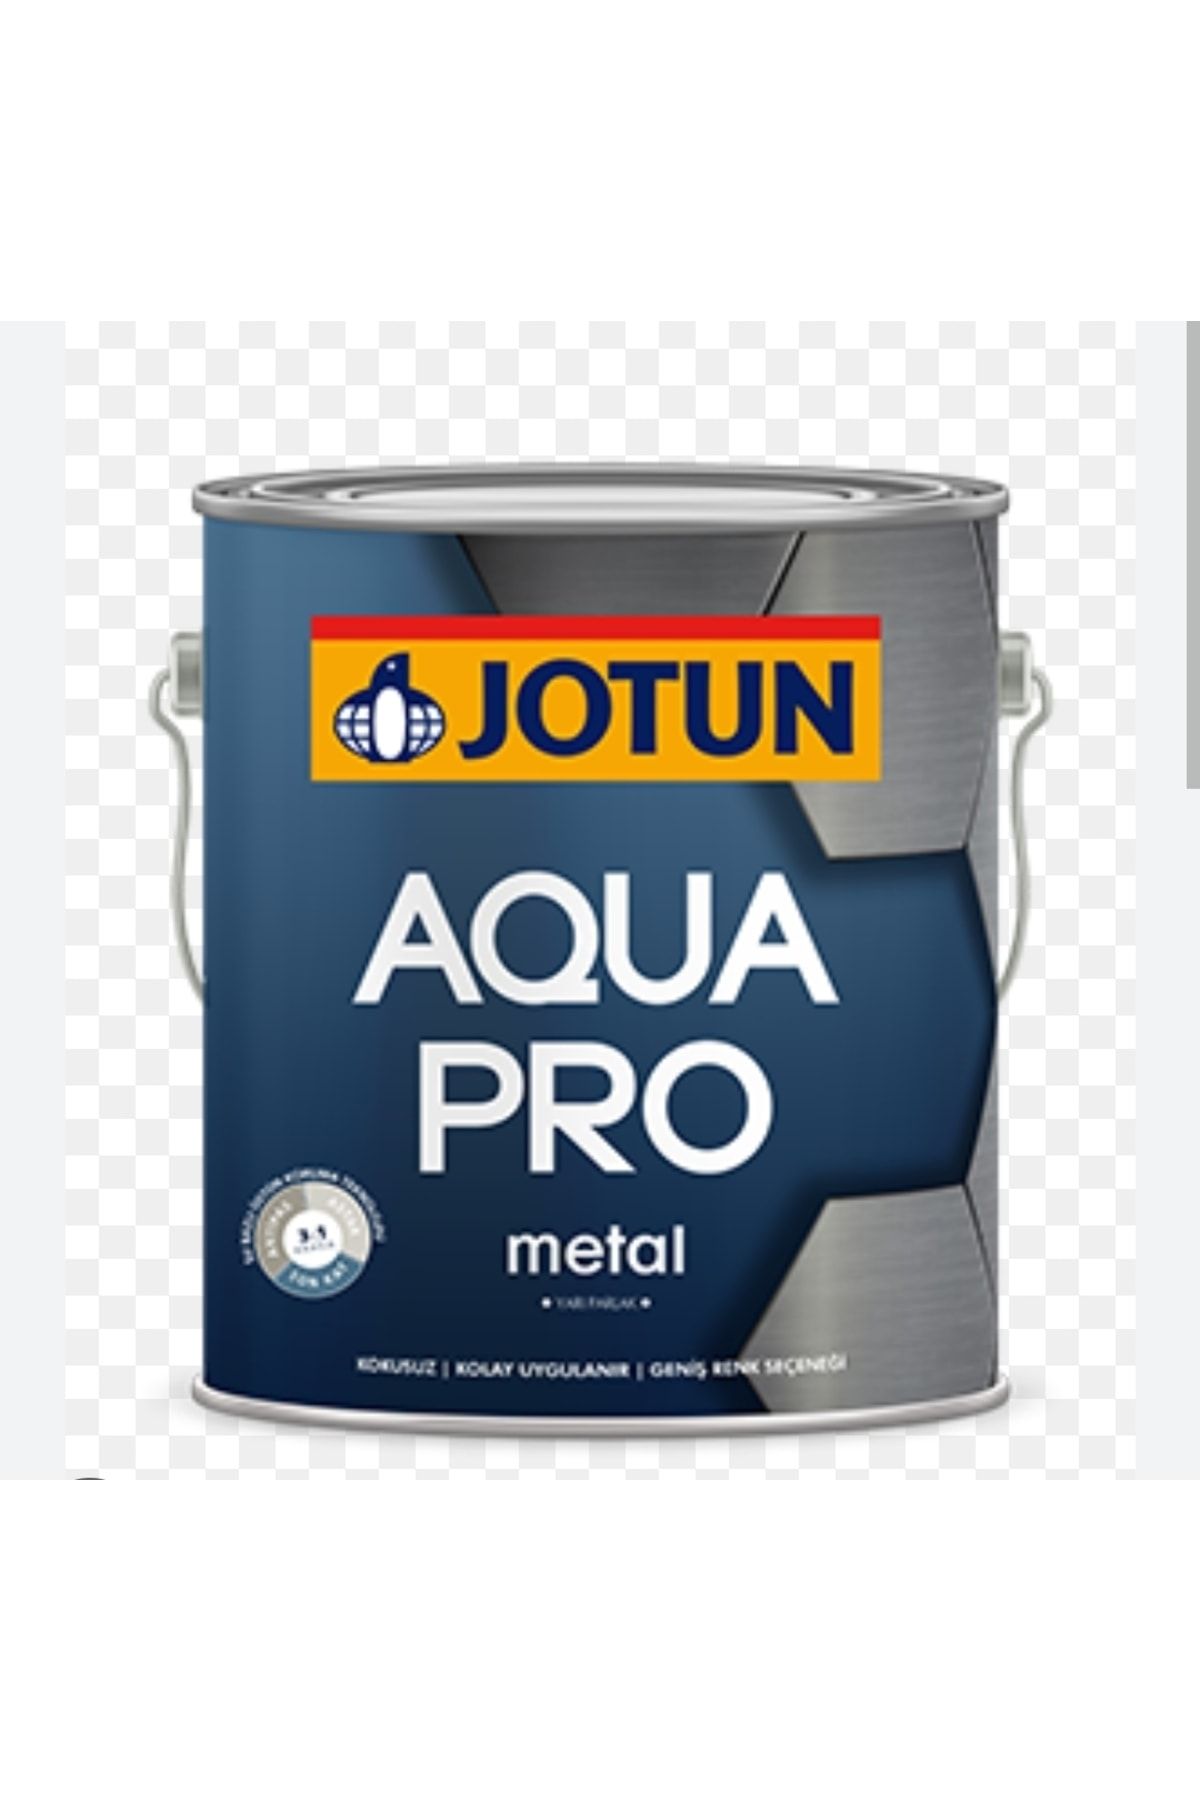 Jotun Aqua Pro Metal Boyası 2.25 Lt